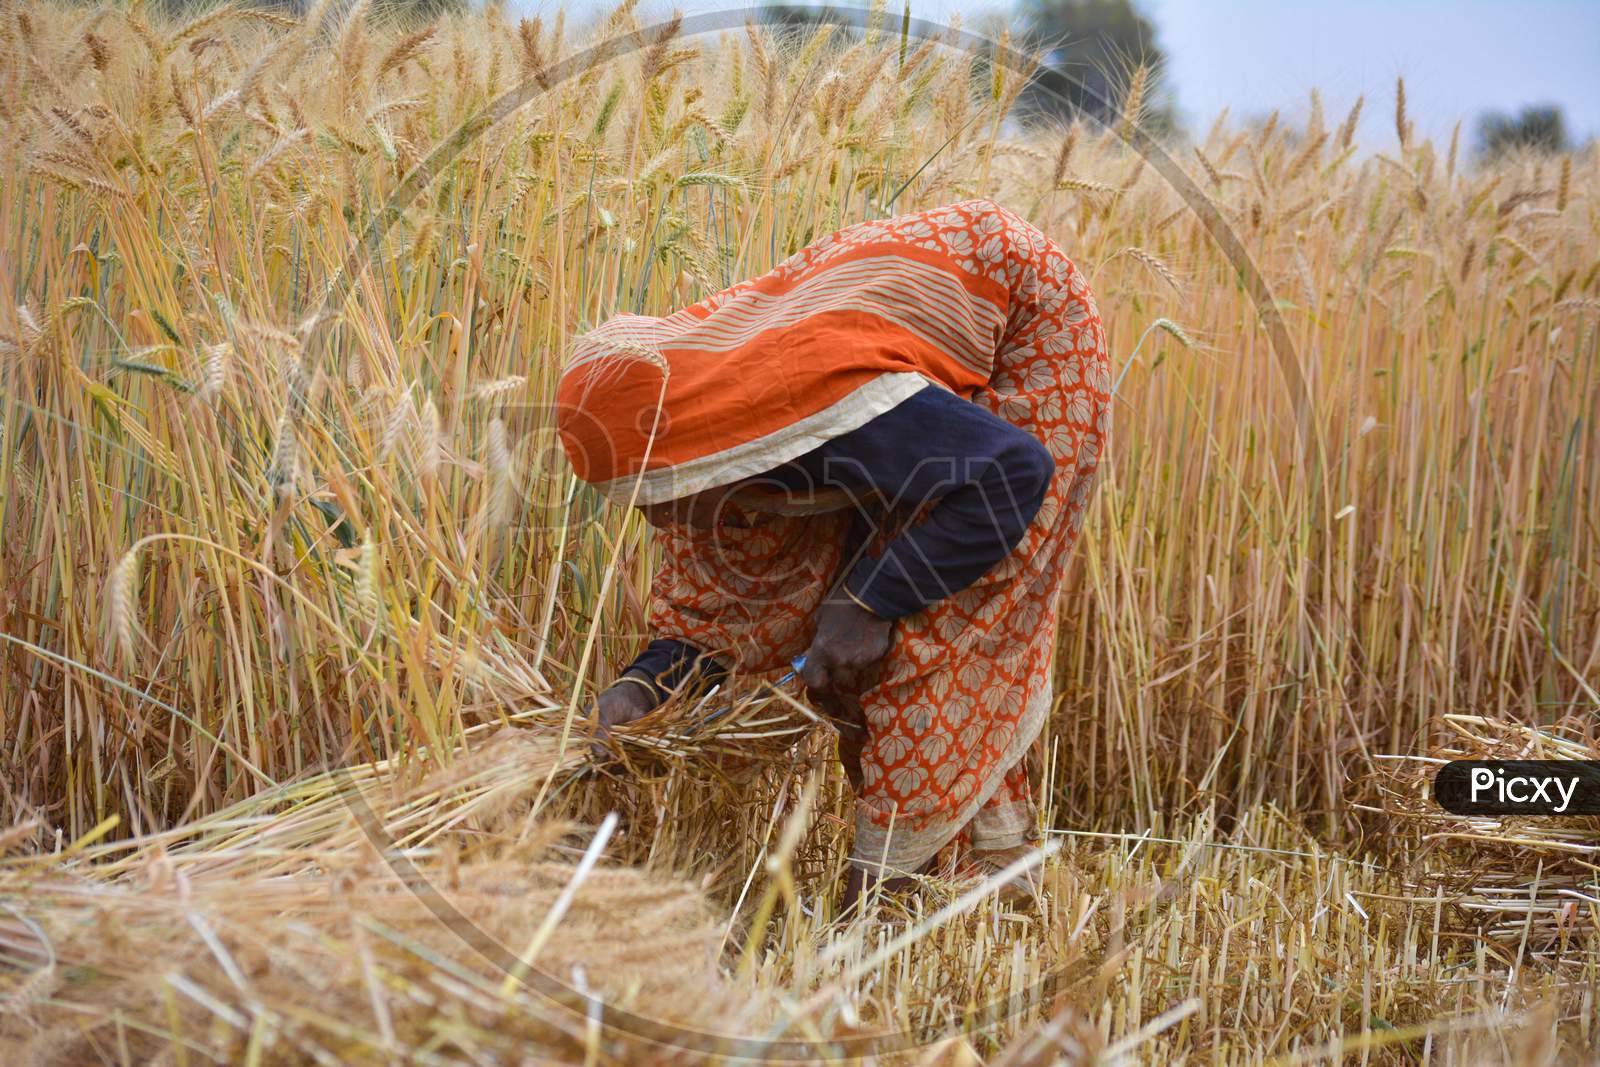 TIKAMGARH, MADHYA PRADESH, INDIA - MARCH 20, 2020: Indian woman cutting wheat with sickle.